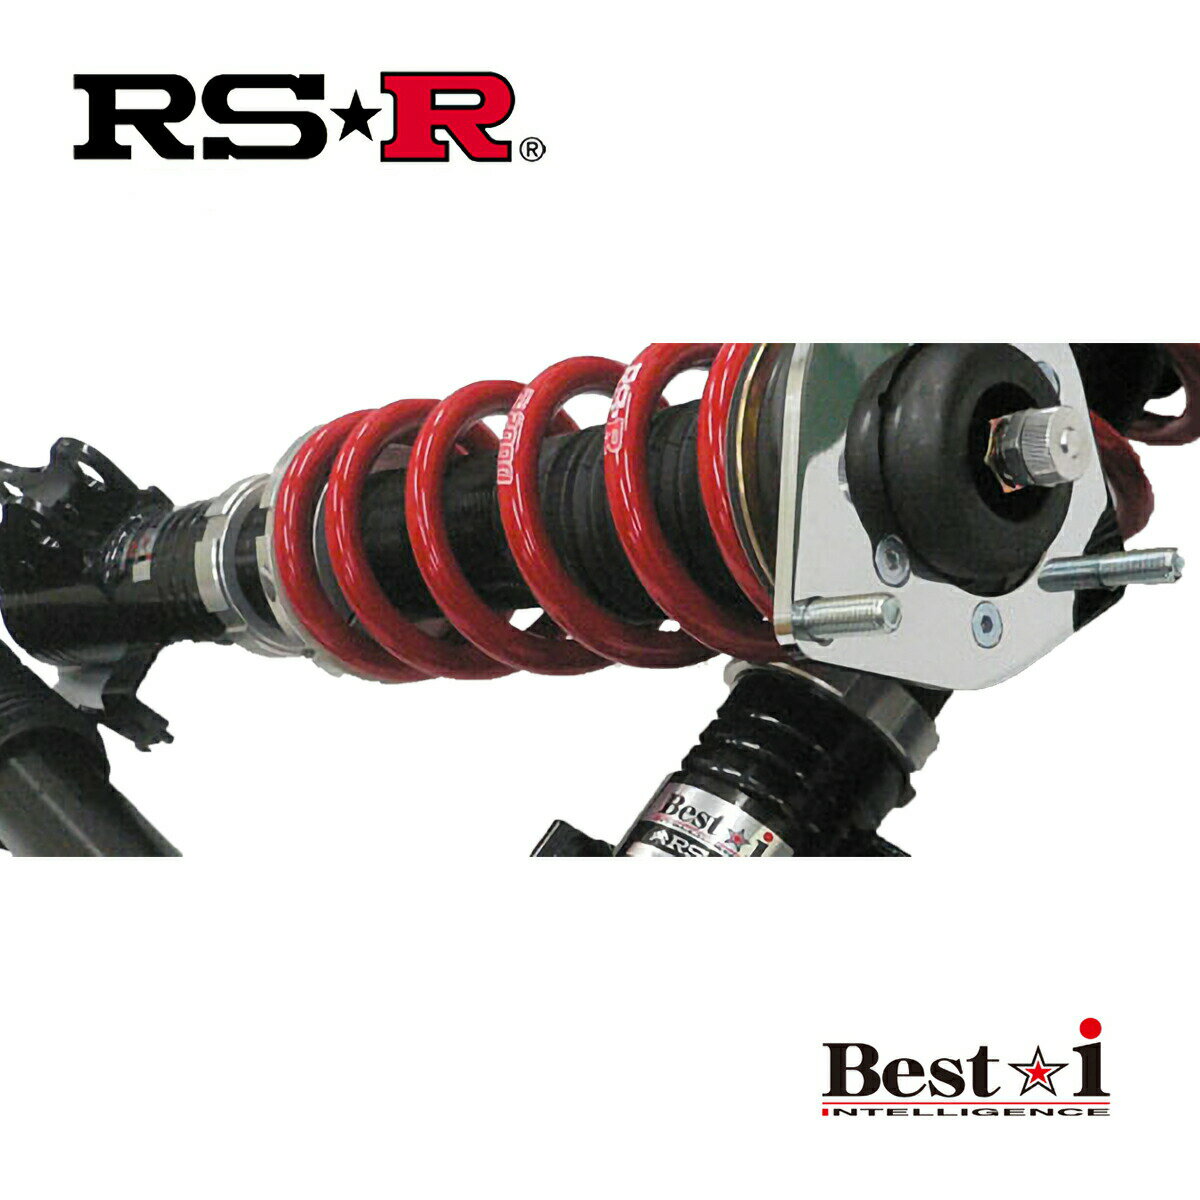 RSR クラウンハイブリッド GWS224 車高調 リア車高調整: ネジ式 BIT968M RS-R Best-i ベストi